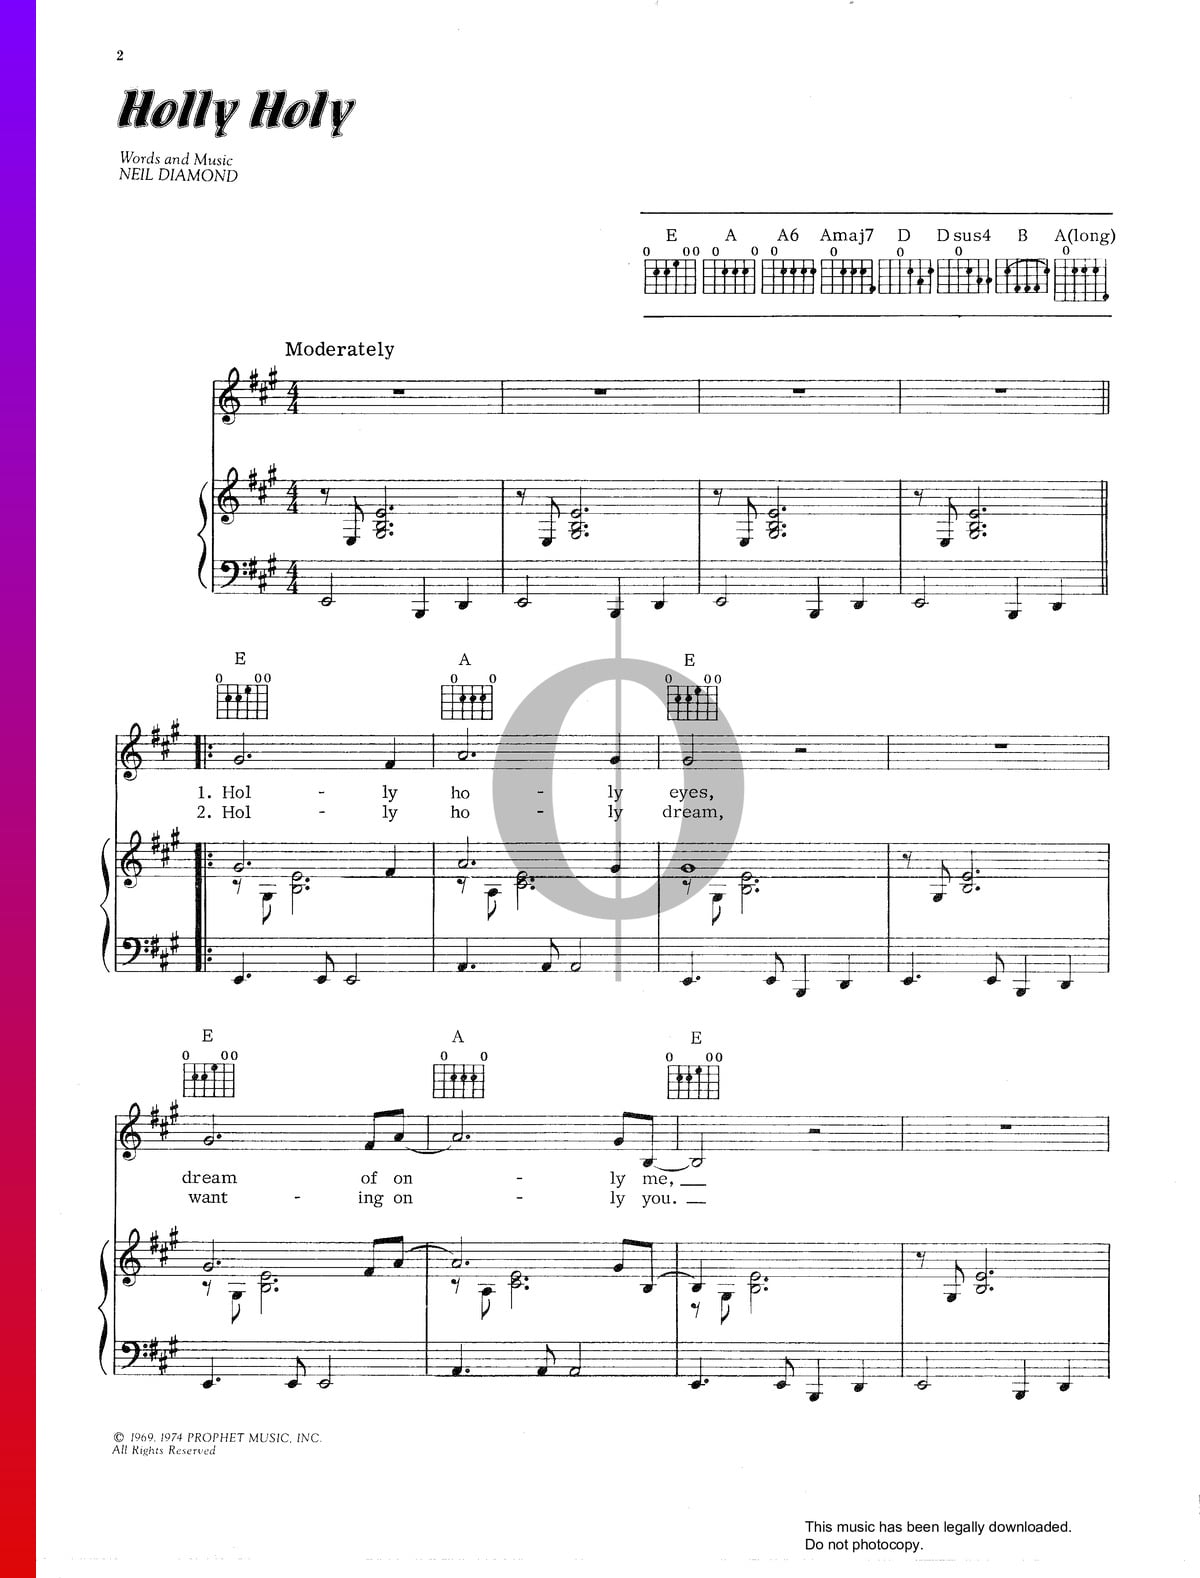 Holly Holy Sheet Music (Piano, Voice, Guitar) - OKTAV